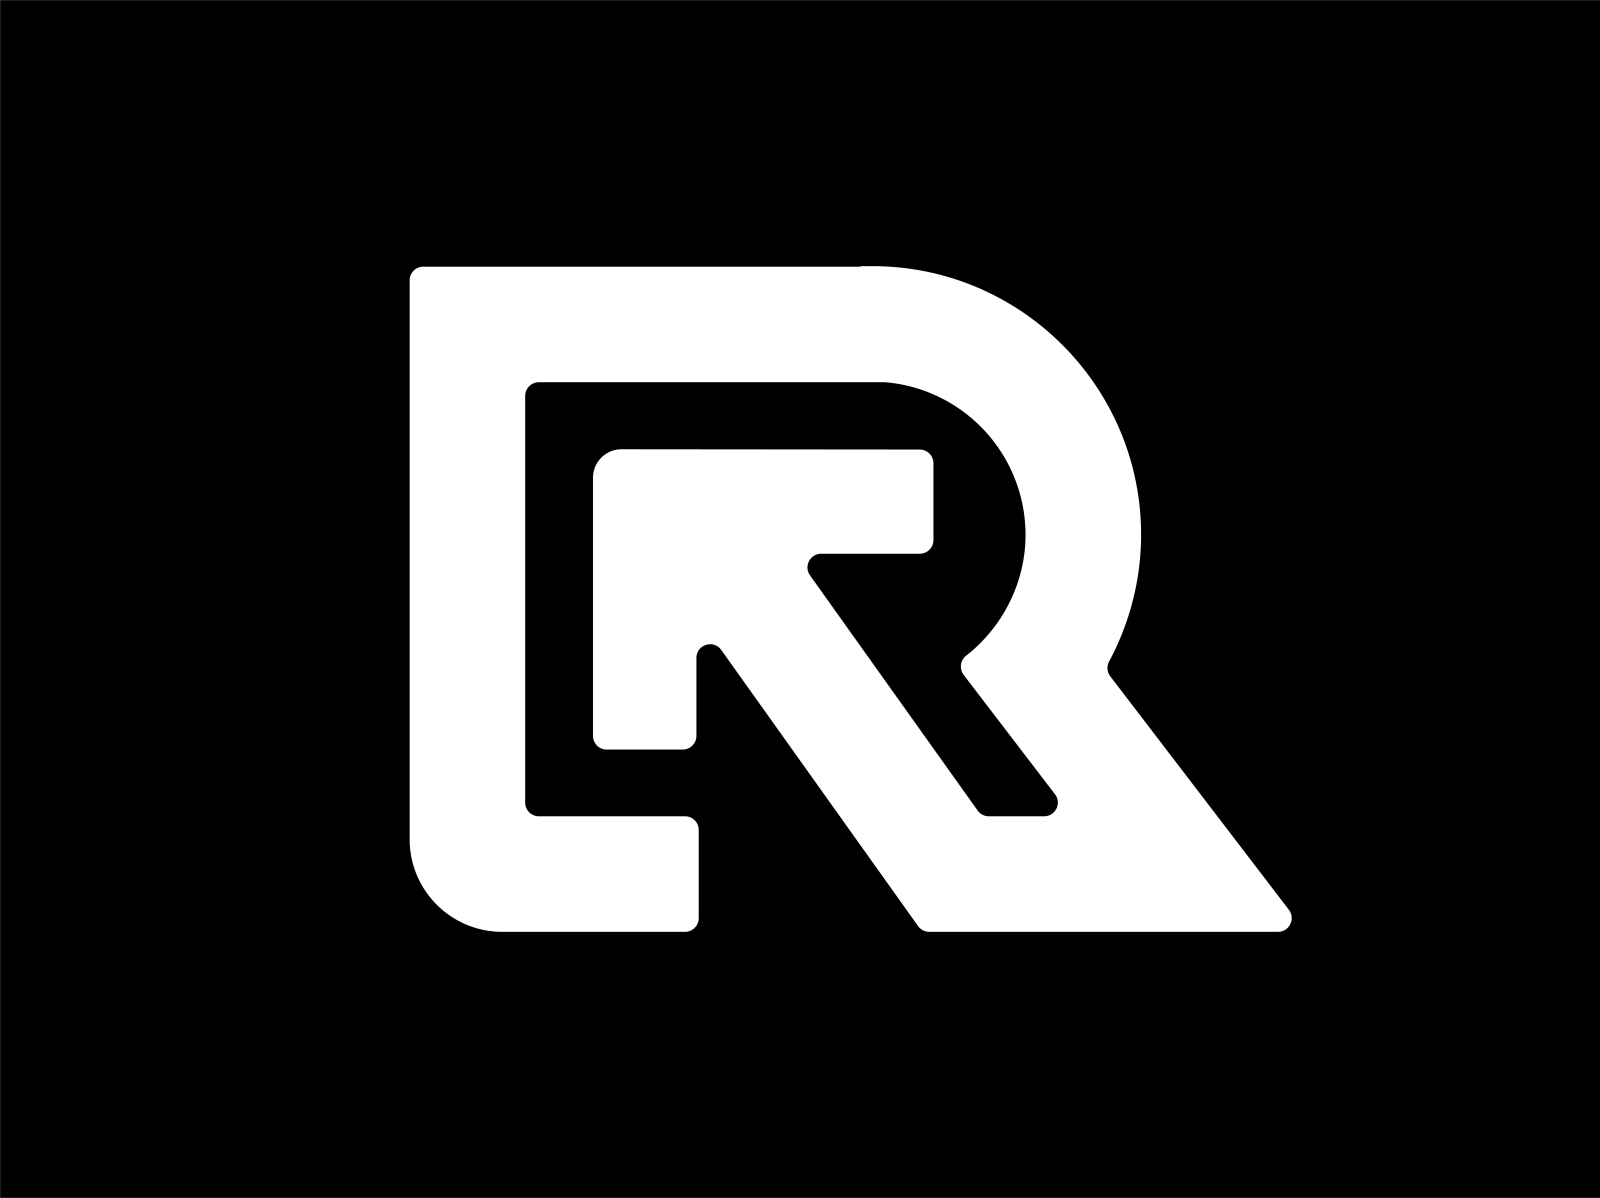 Reinforce Arrow Logo by Durand Cosca on Dribbble